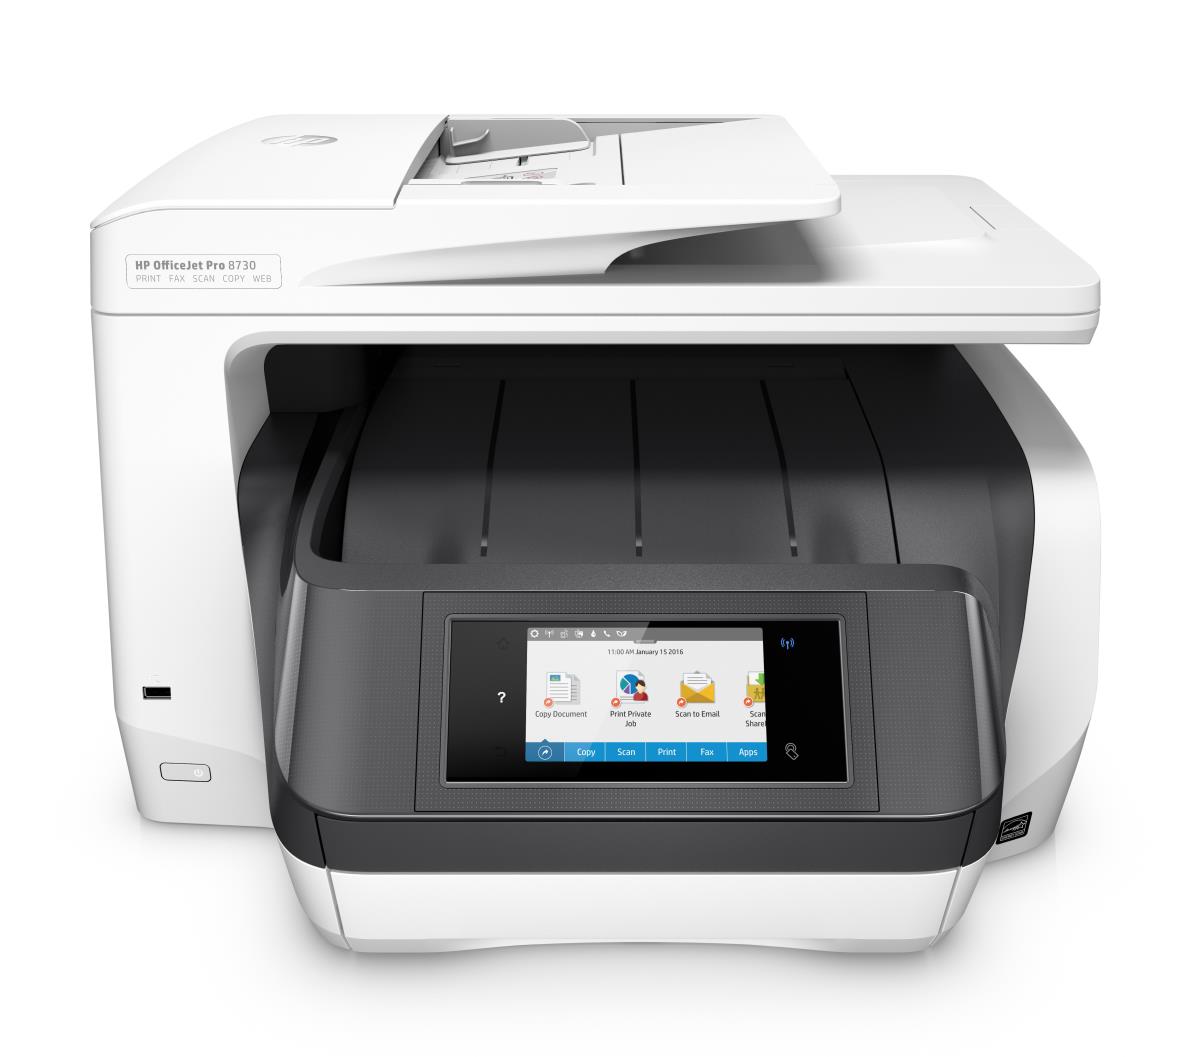 HP OfficeJet Pro 9022e imprimante multifonction avec wifi (4 en 1